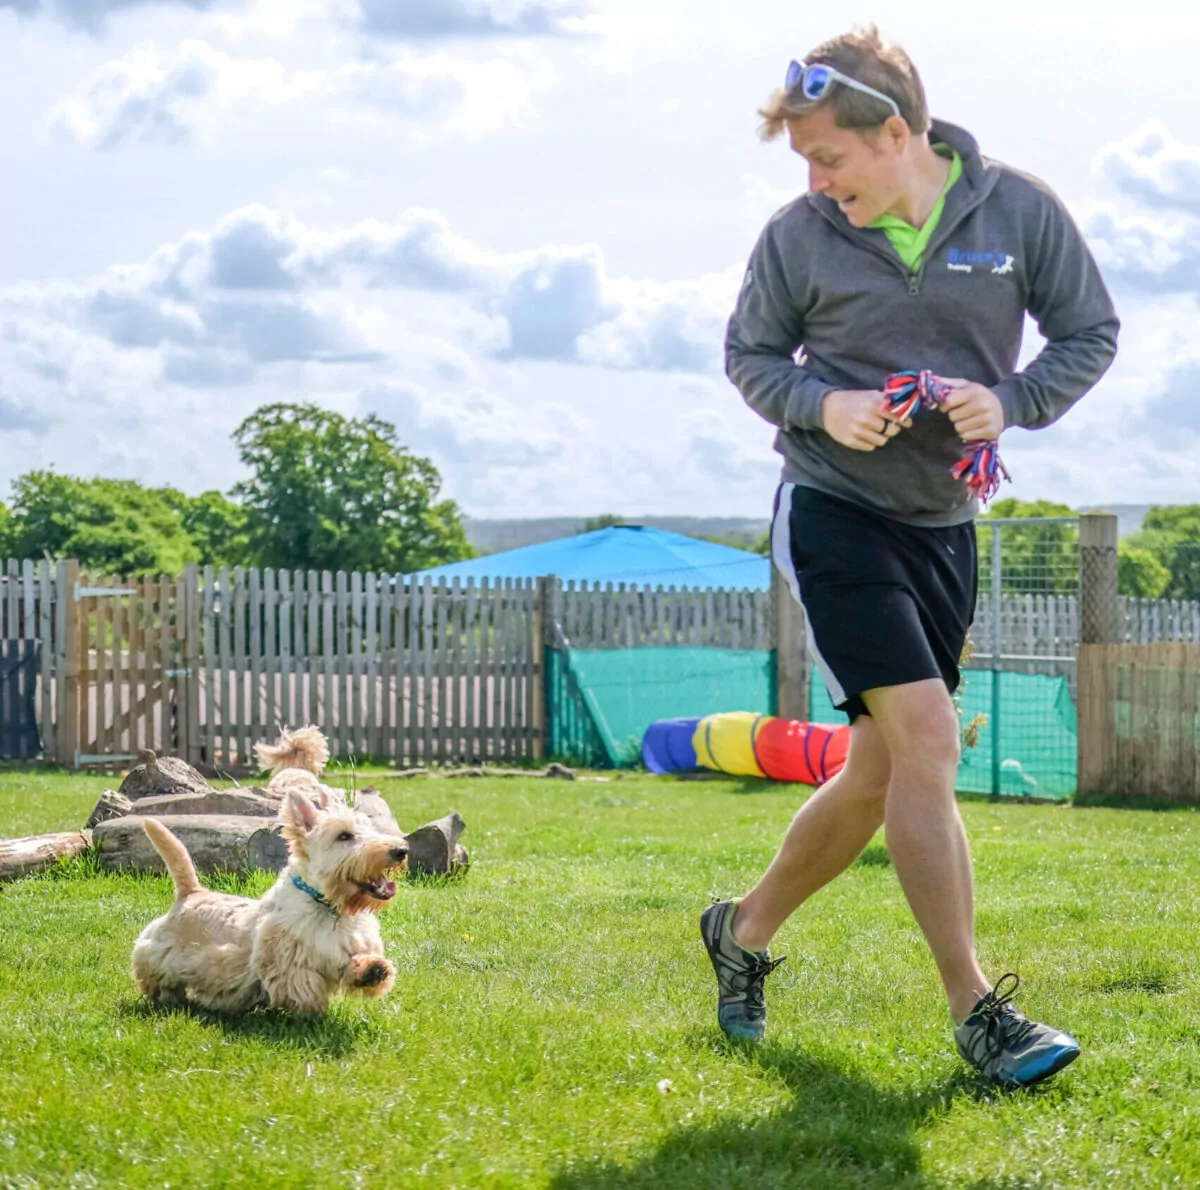 Bruce’s team member during dog training while running alongside a terrier dog